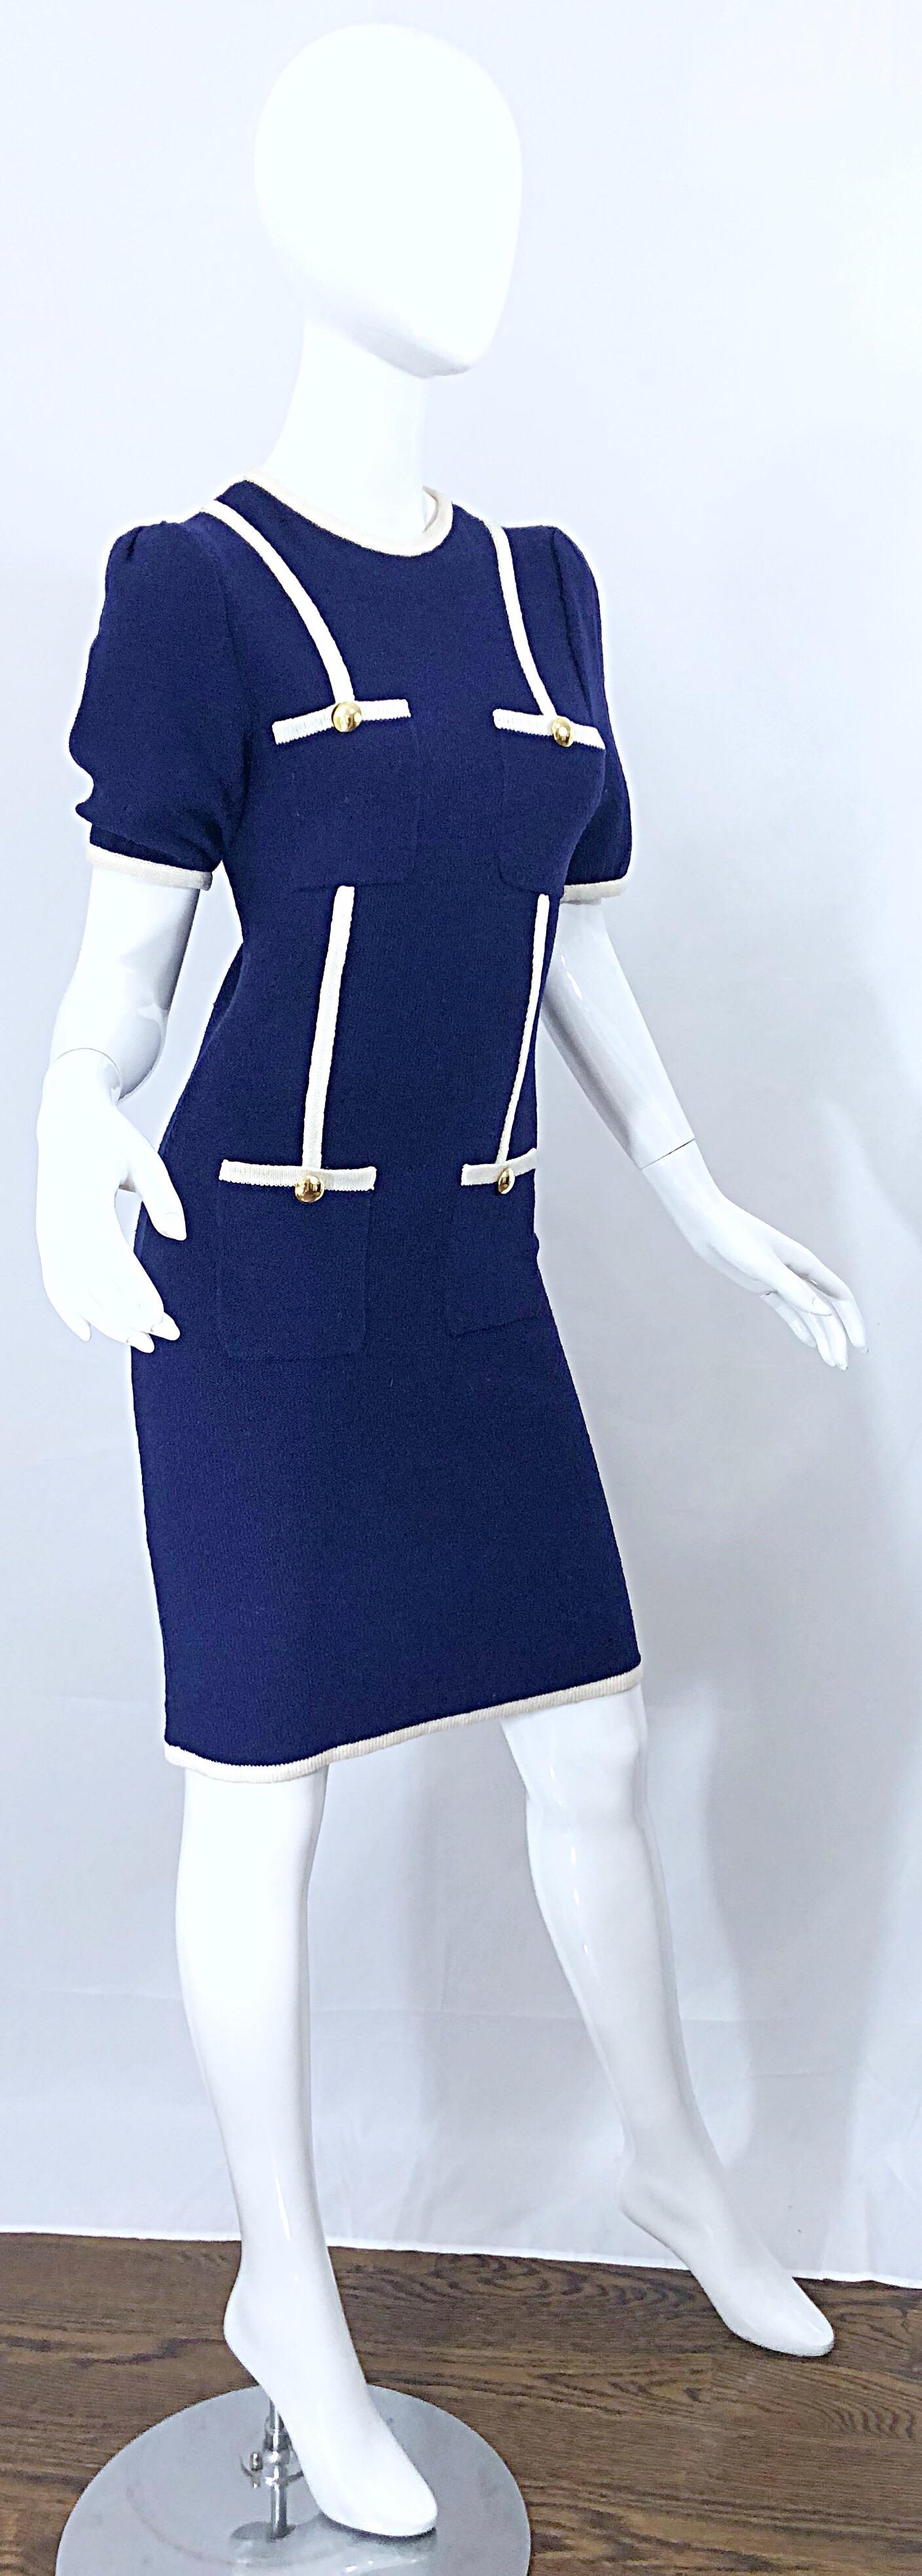 Women's Vintage Adolfo for Saks 5th Avenue Navy Blue and White Nautical Knit Dress